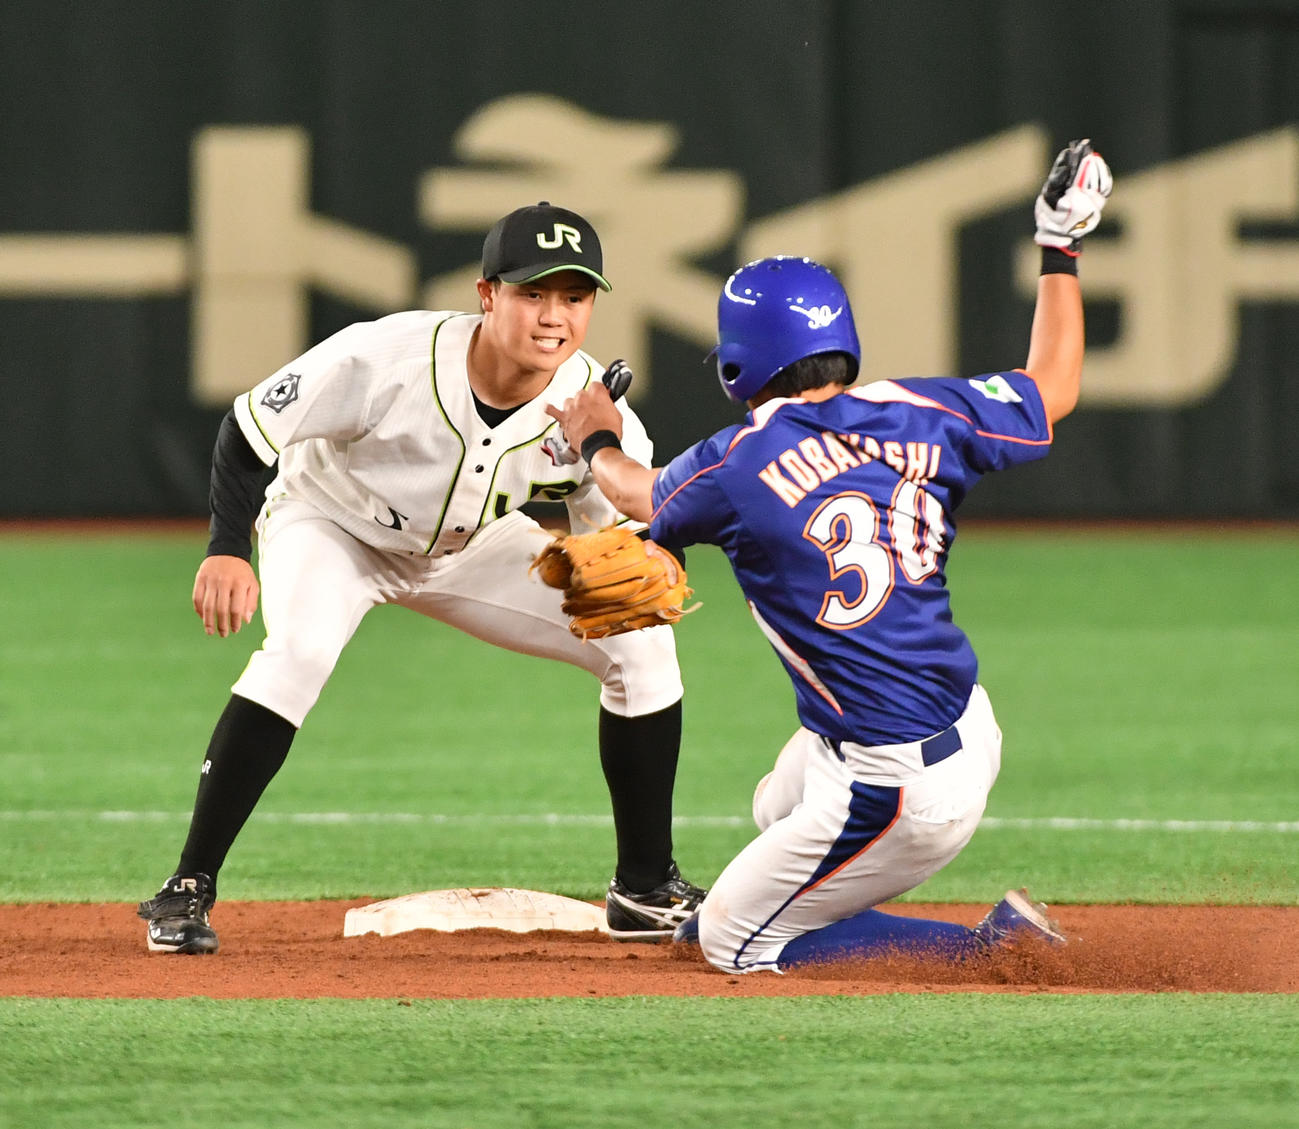 JR北海道クラブ対NTT東日本　3回裏NTT東日本2死一塁、一塁走者小林が盗塁を試みるがアウトになる。左はJR北海道クラブ・福田二塁手（撮影・柴田隆二）